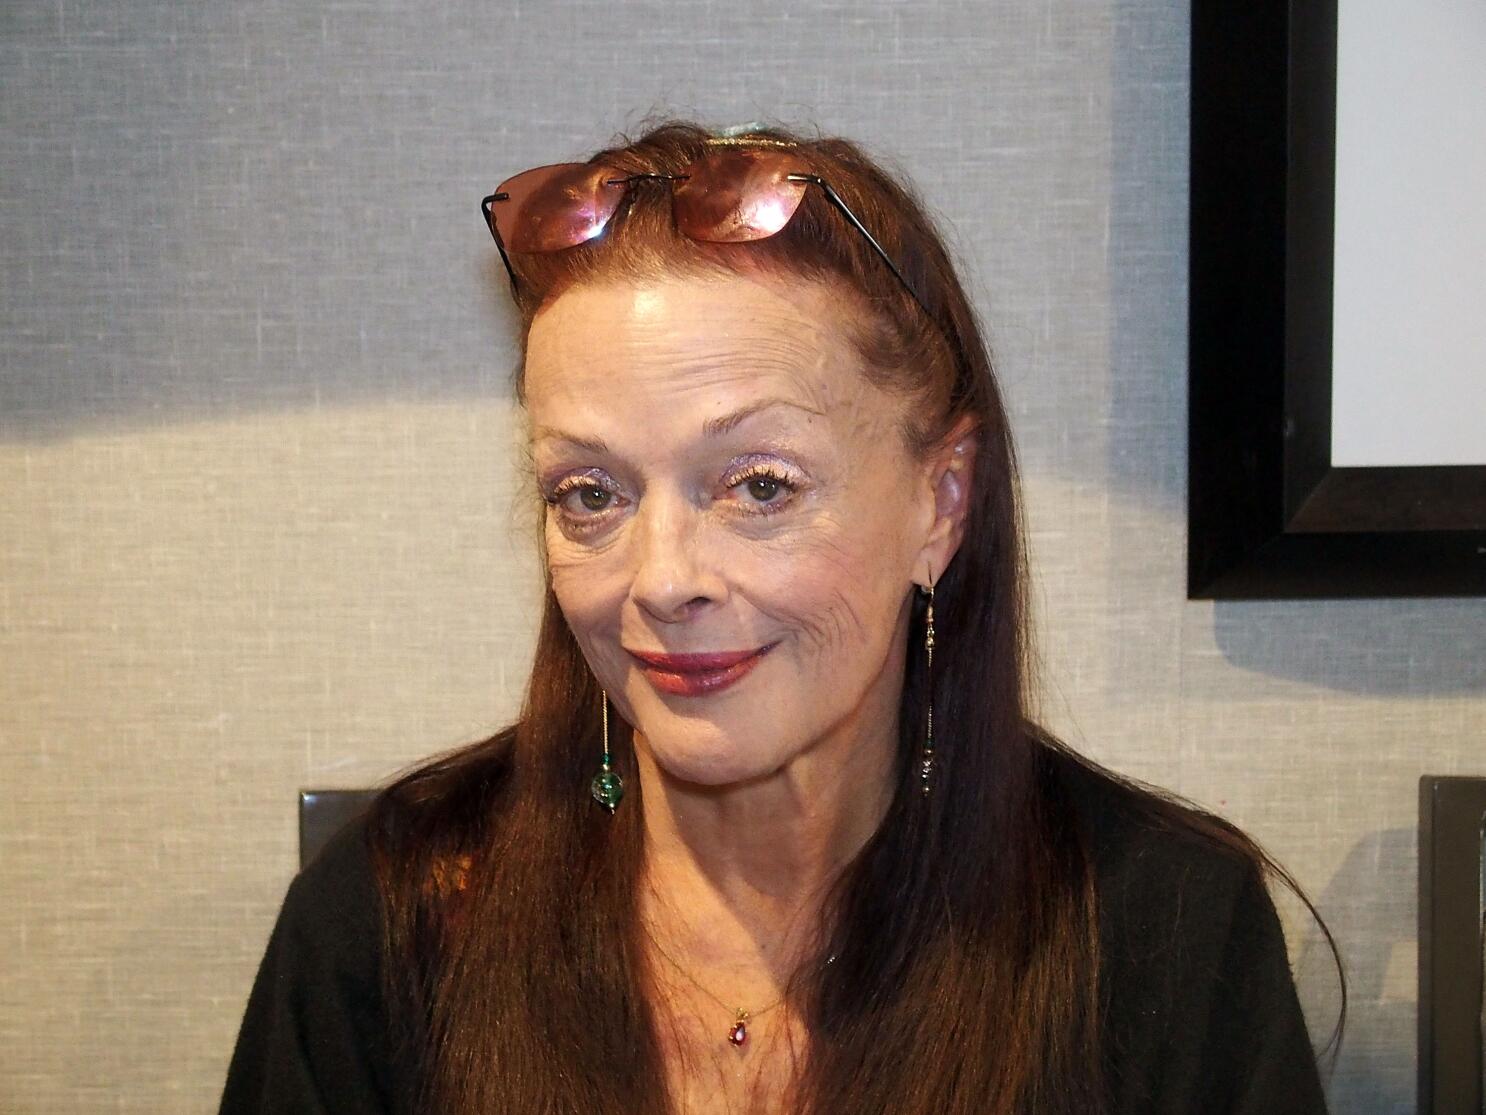 Lisa Loring, the original Wednesday Addams, is dead at 64 : NPR